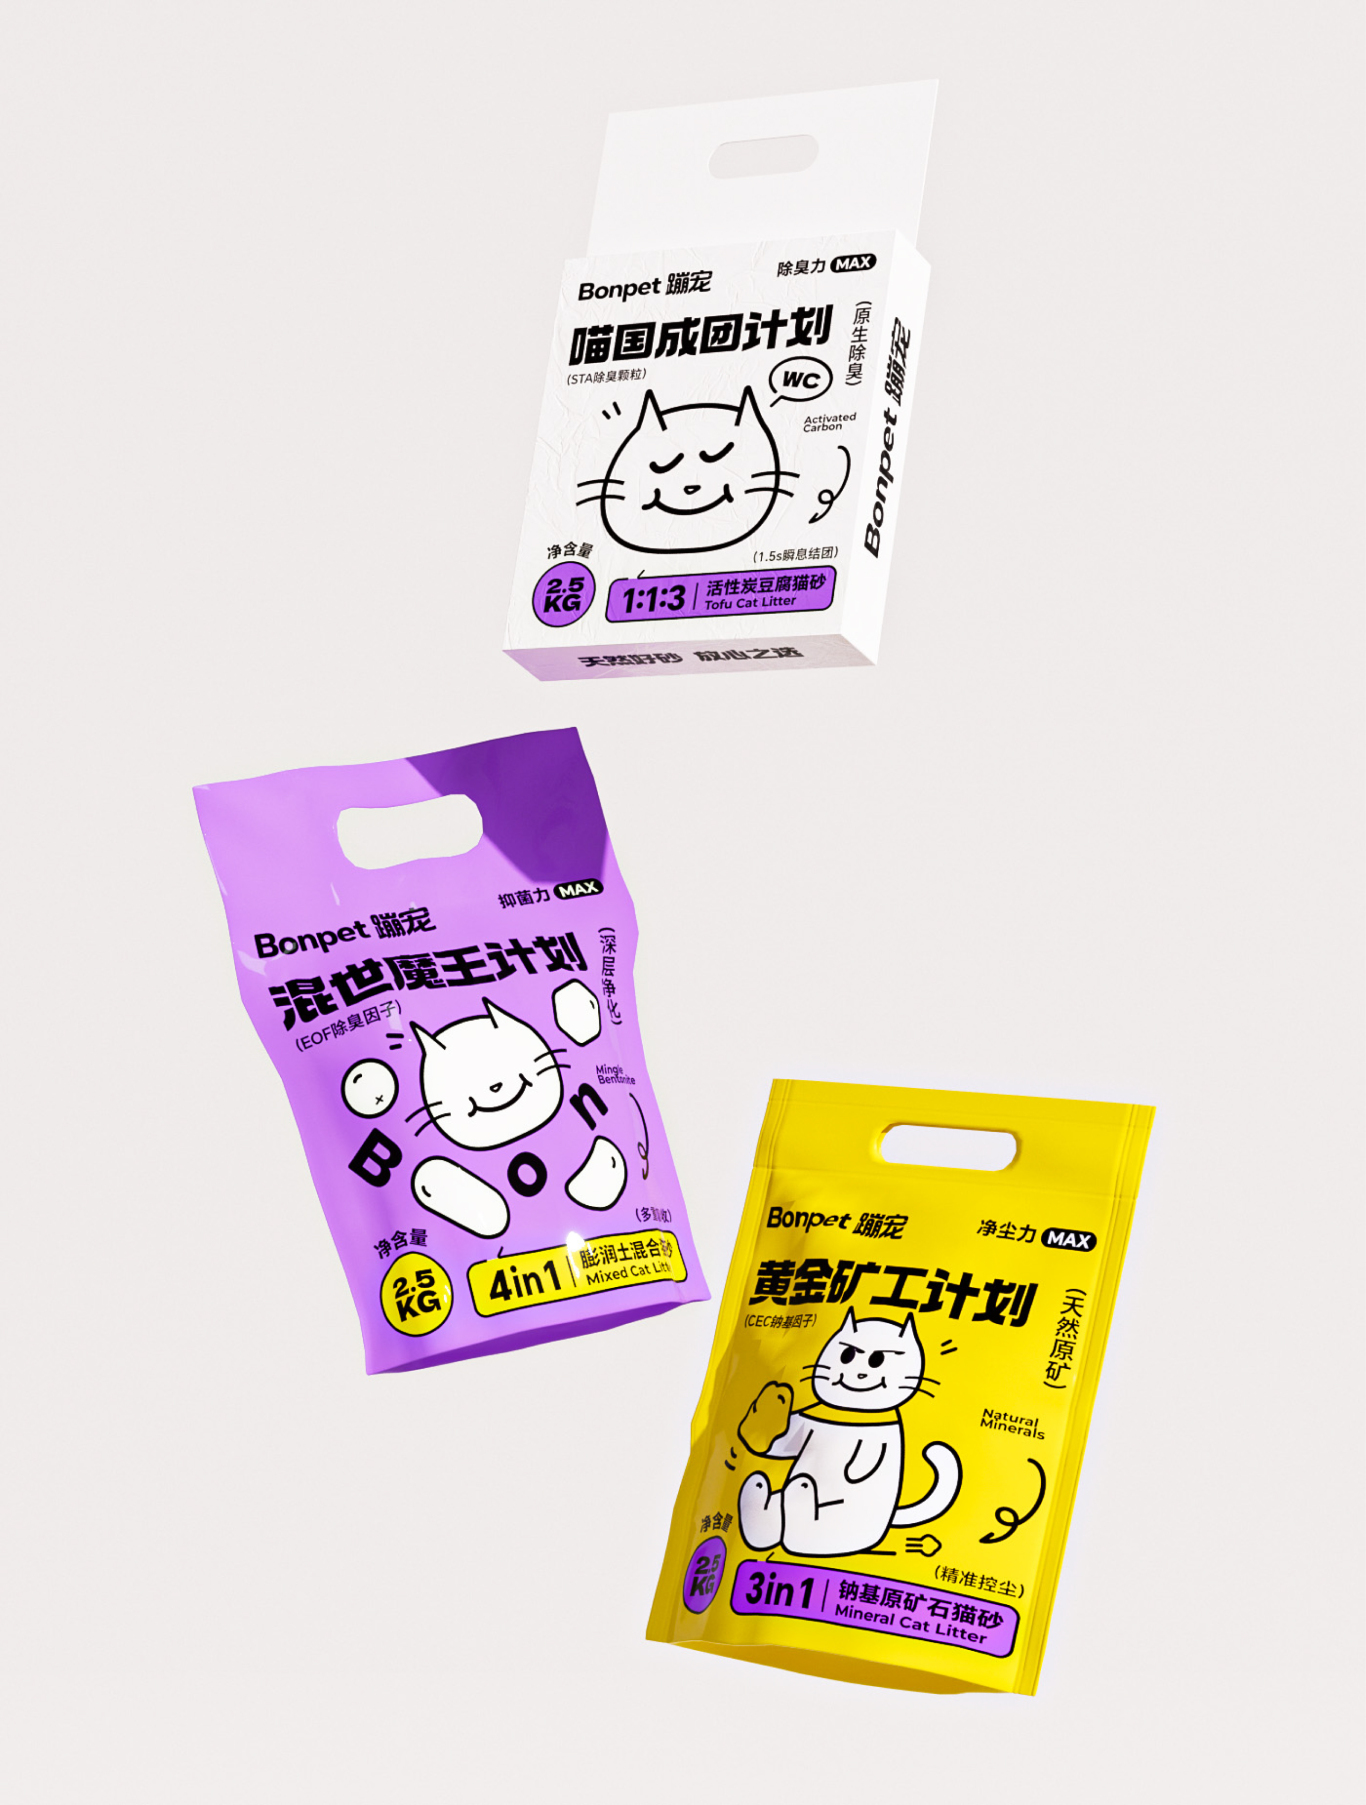 Bonpet X 蹦宠猫砂 C位出道丨趣味猫砂系列包装设计图3